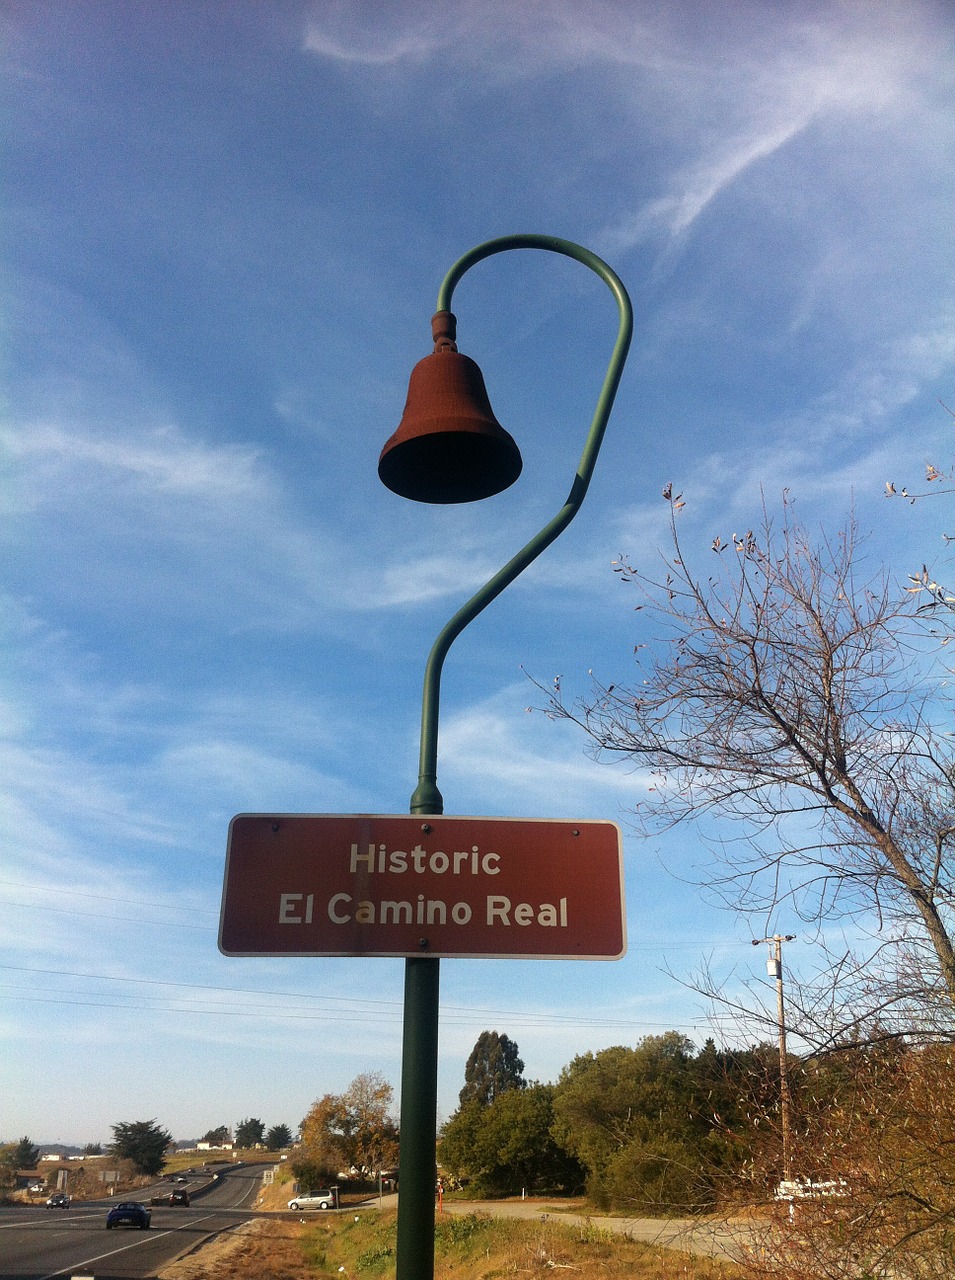 Edit free photo of El camino real,bell,roadsign,road sign,highway